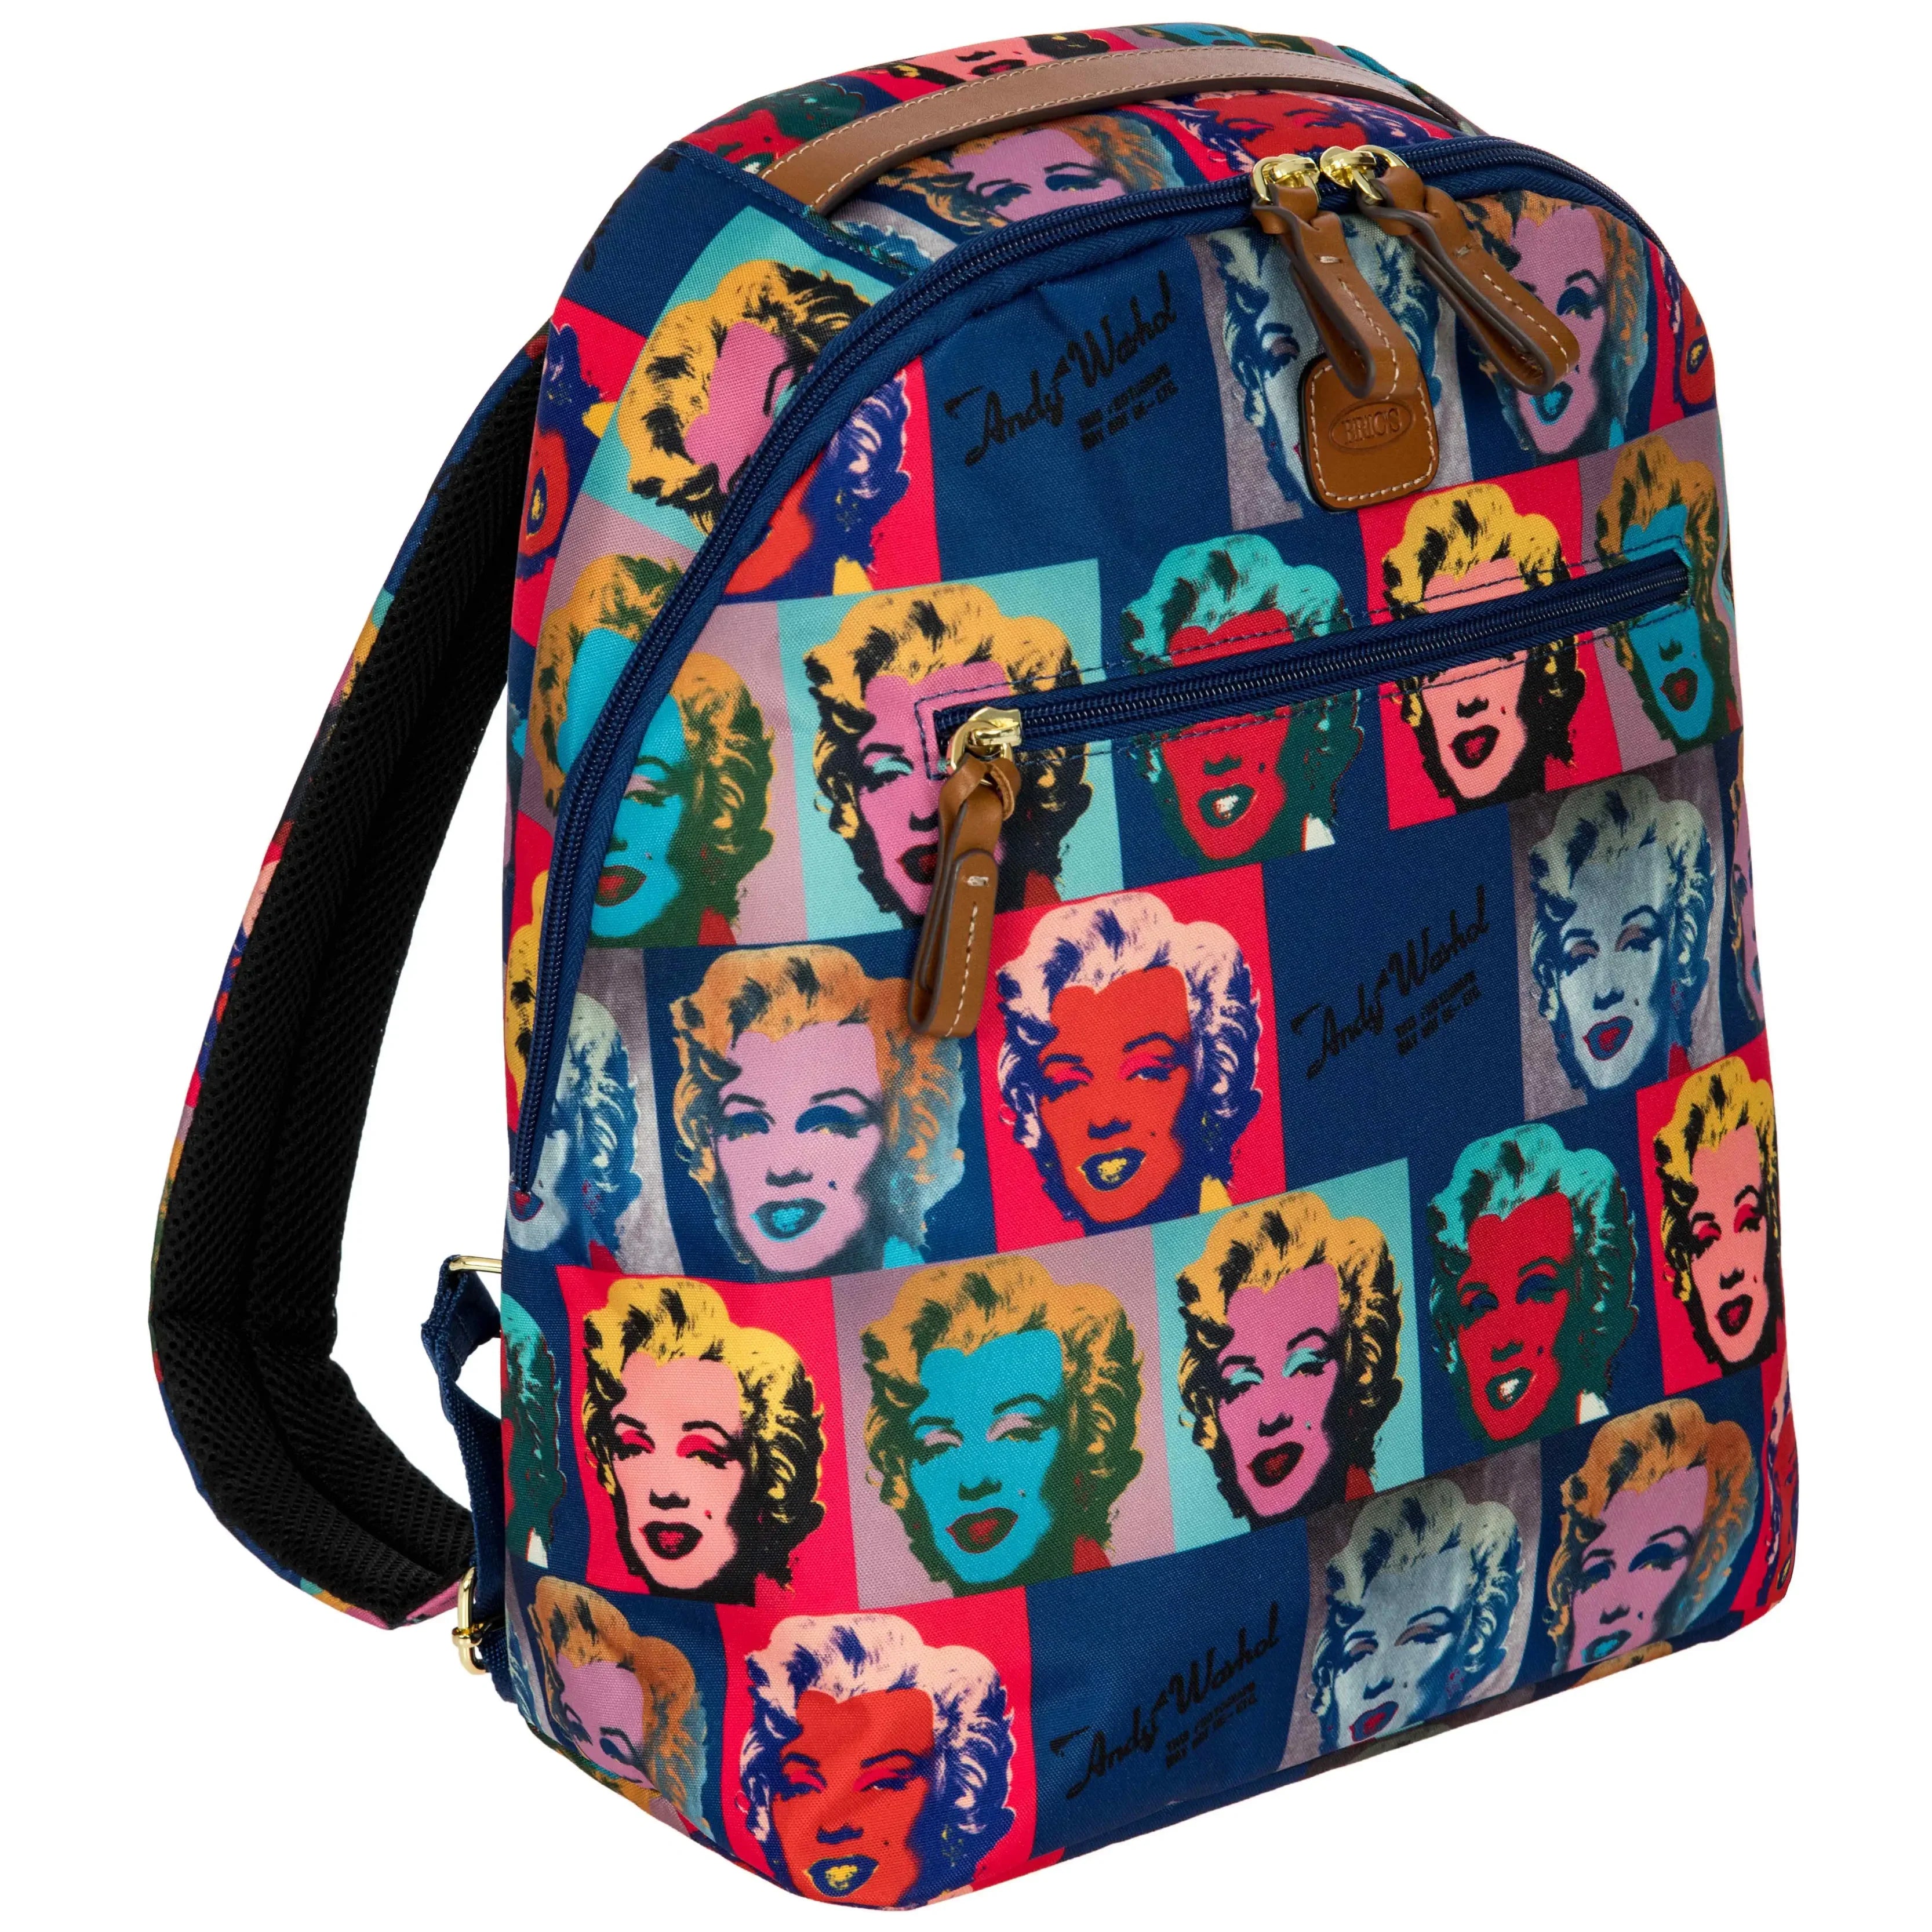 Brics Andy Warhol backpack 34 cm - Marilyn